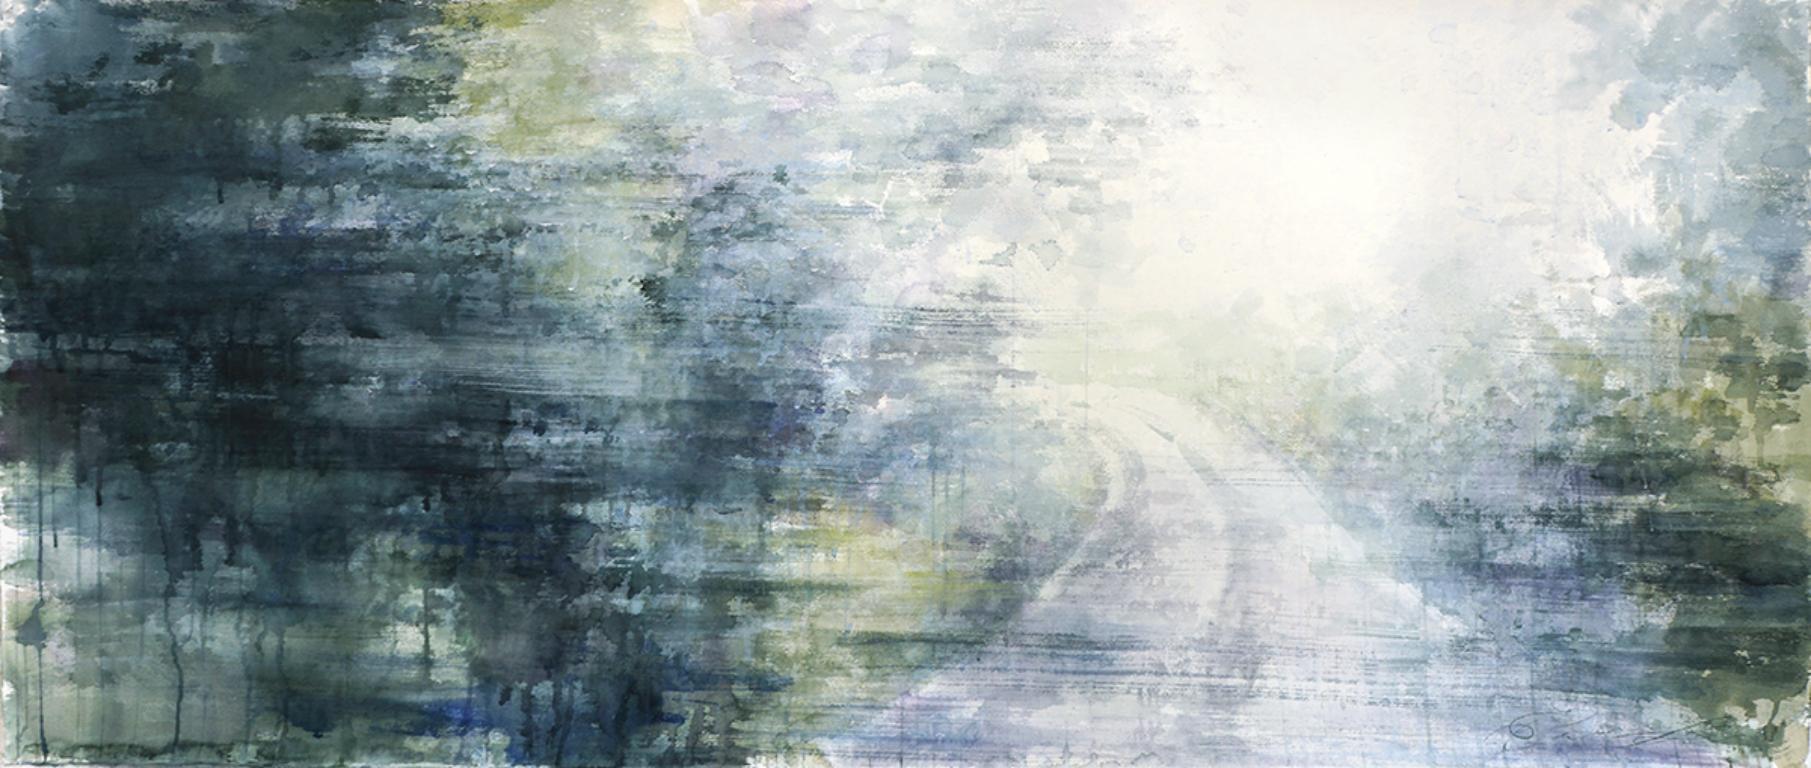 Ekaterina Smirnova Landscape Painting - Misty Path I - 21st Century, Contemporary, Landscape, Watercolor on Paper